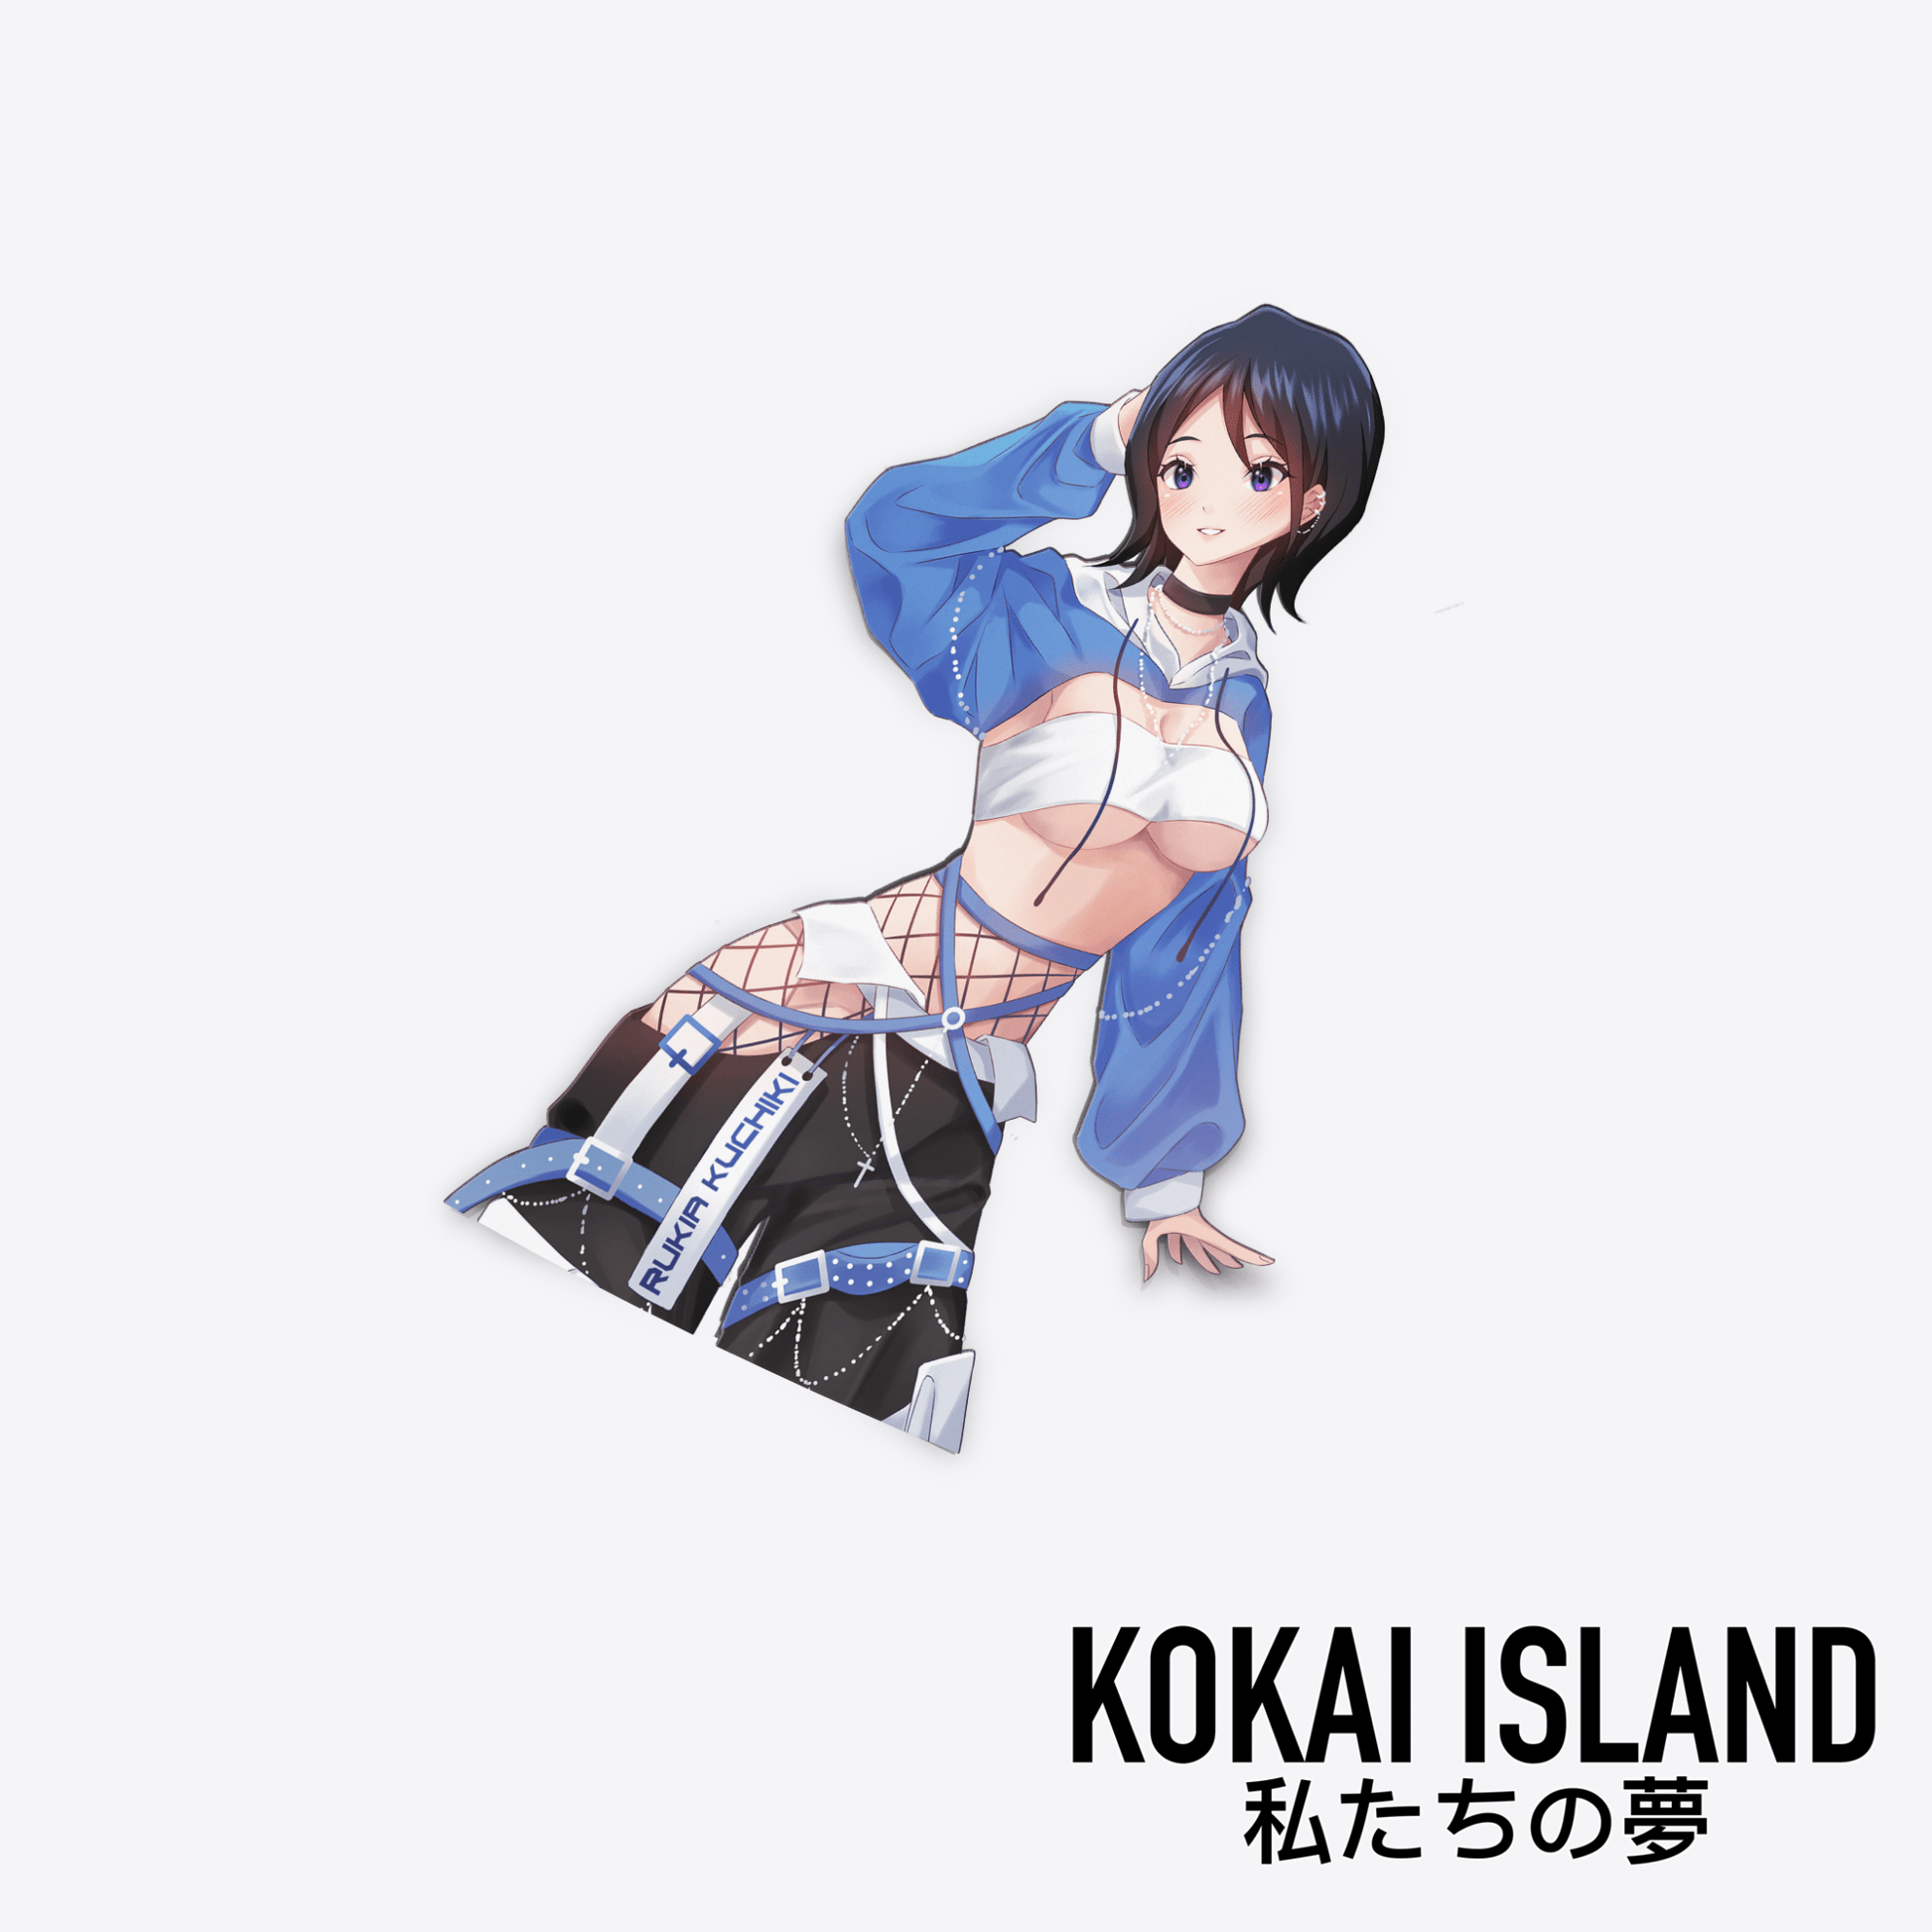 Rukia DecalDecalKokai Island